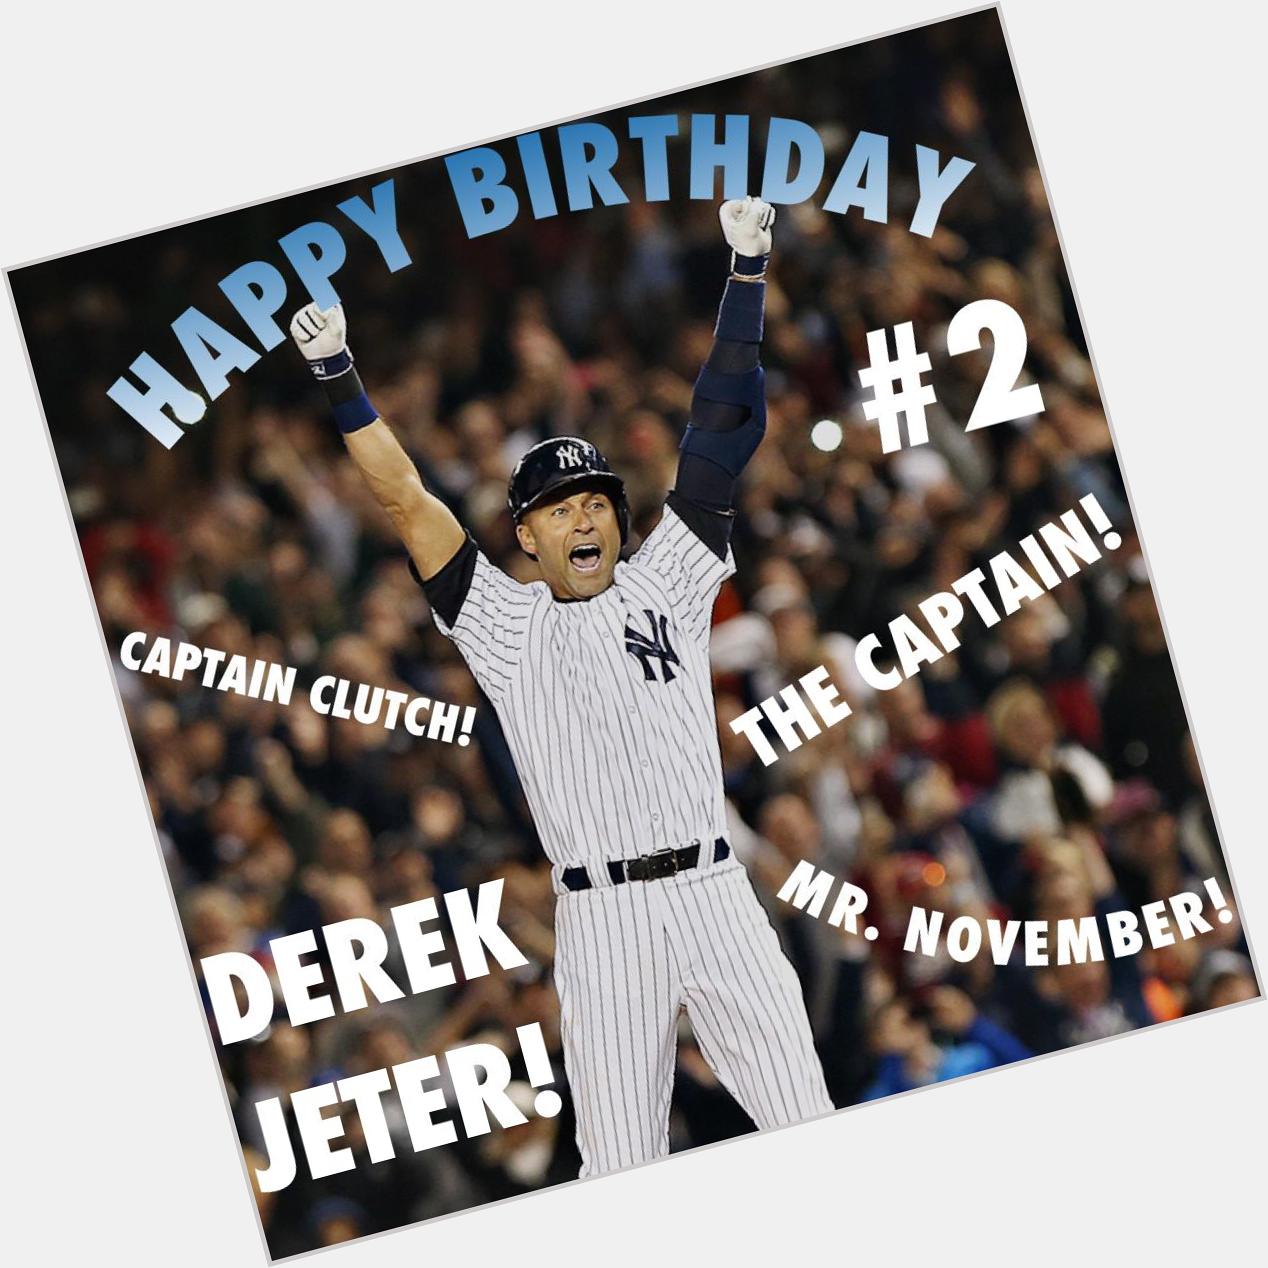 Happy Birthday The Captain, Captain Clutch, Mr. November, Number 2 Derek Jeter   